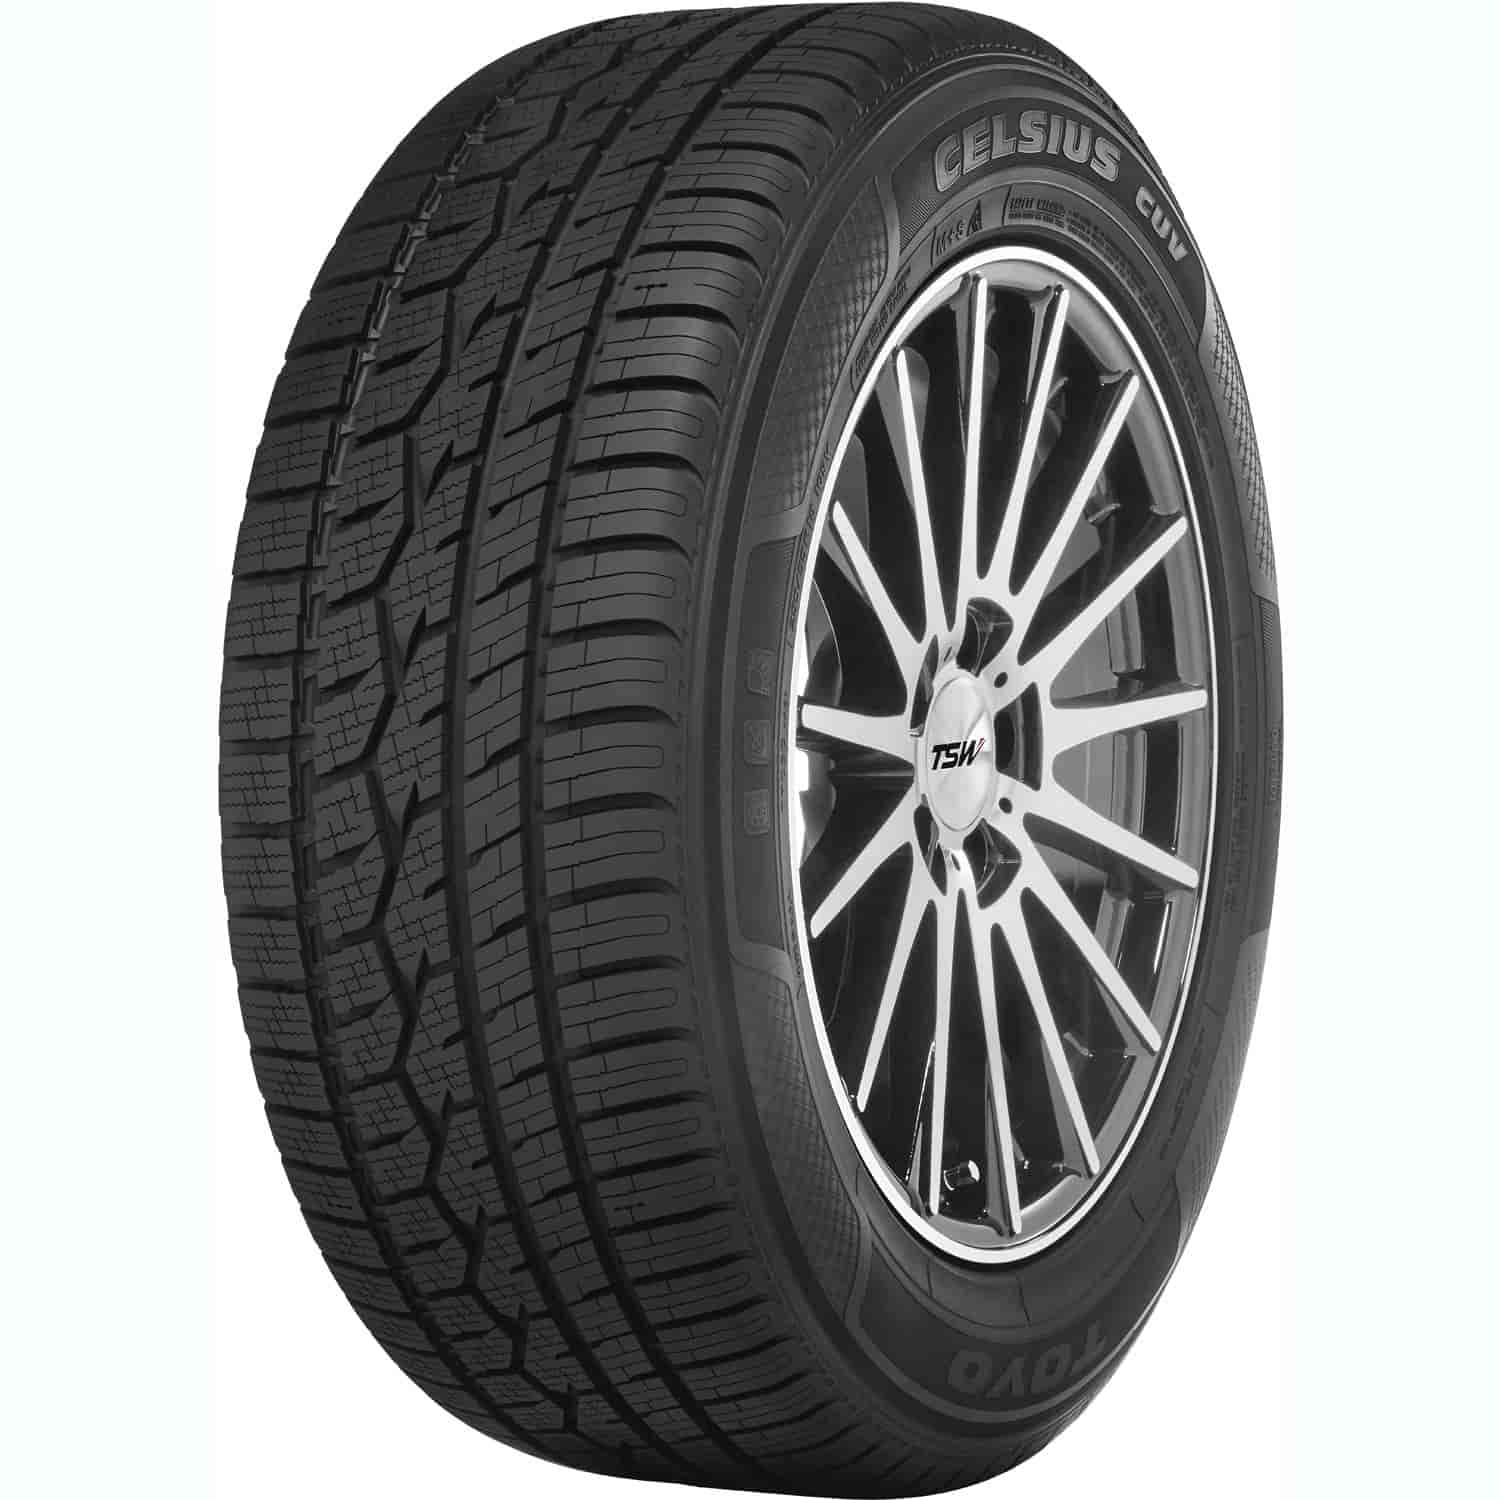 Celsius CUV Tire 255/50R20